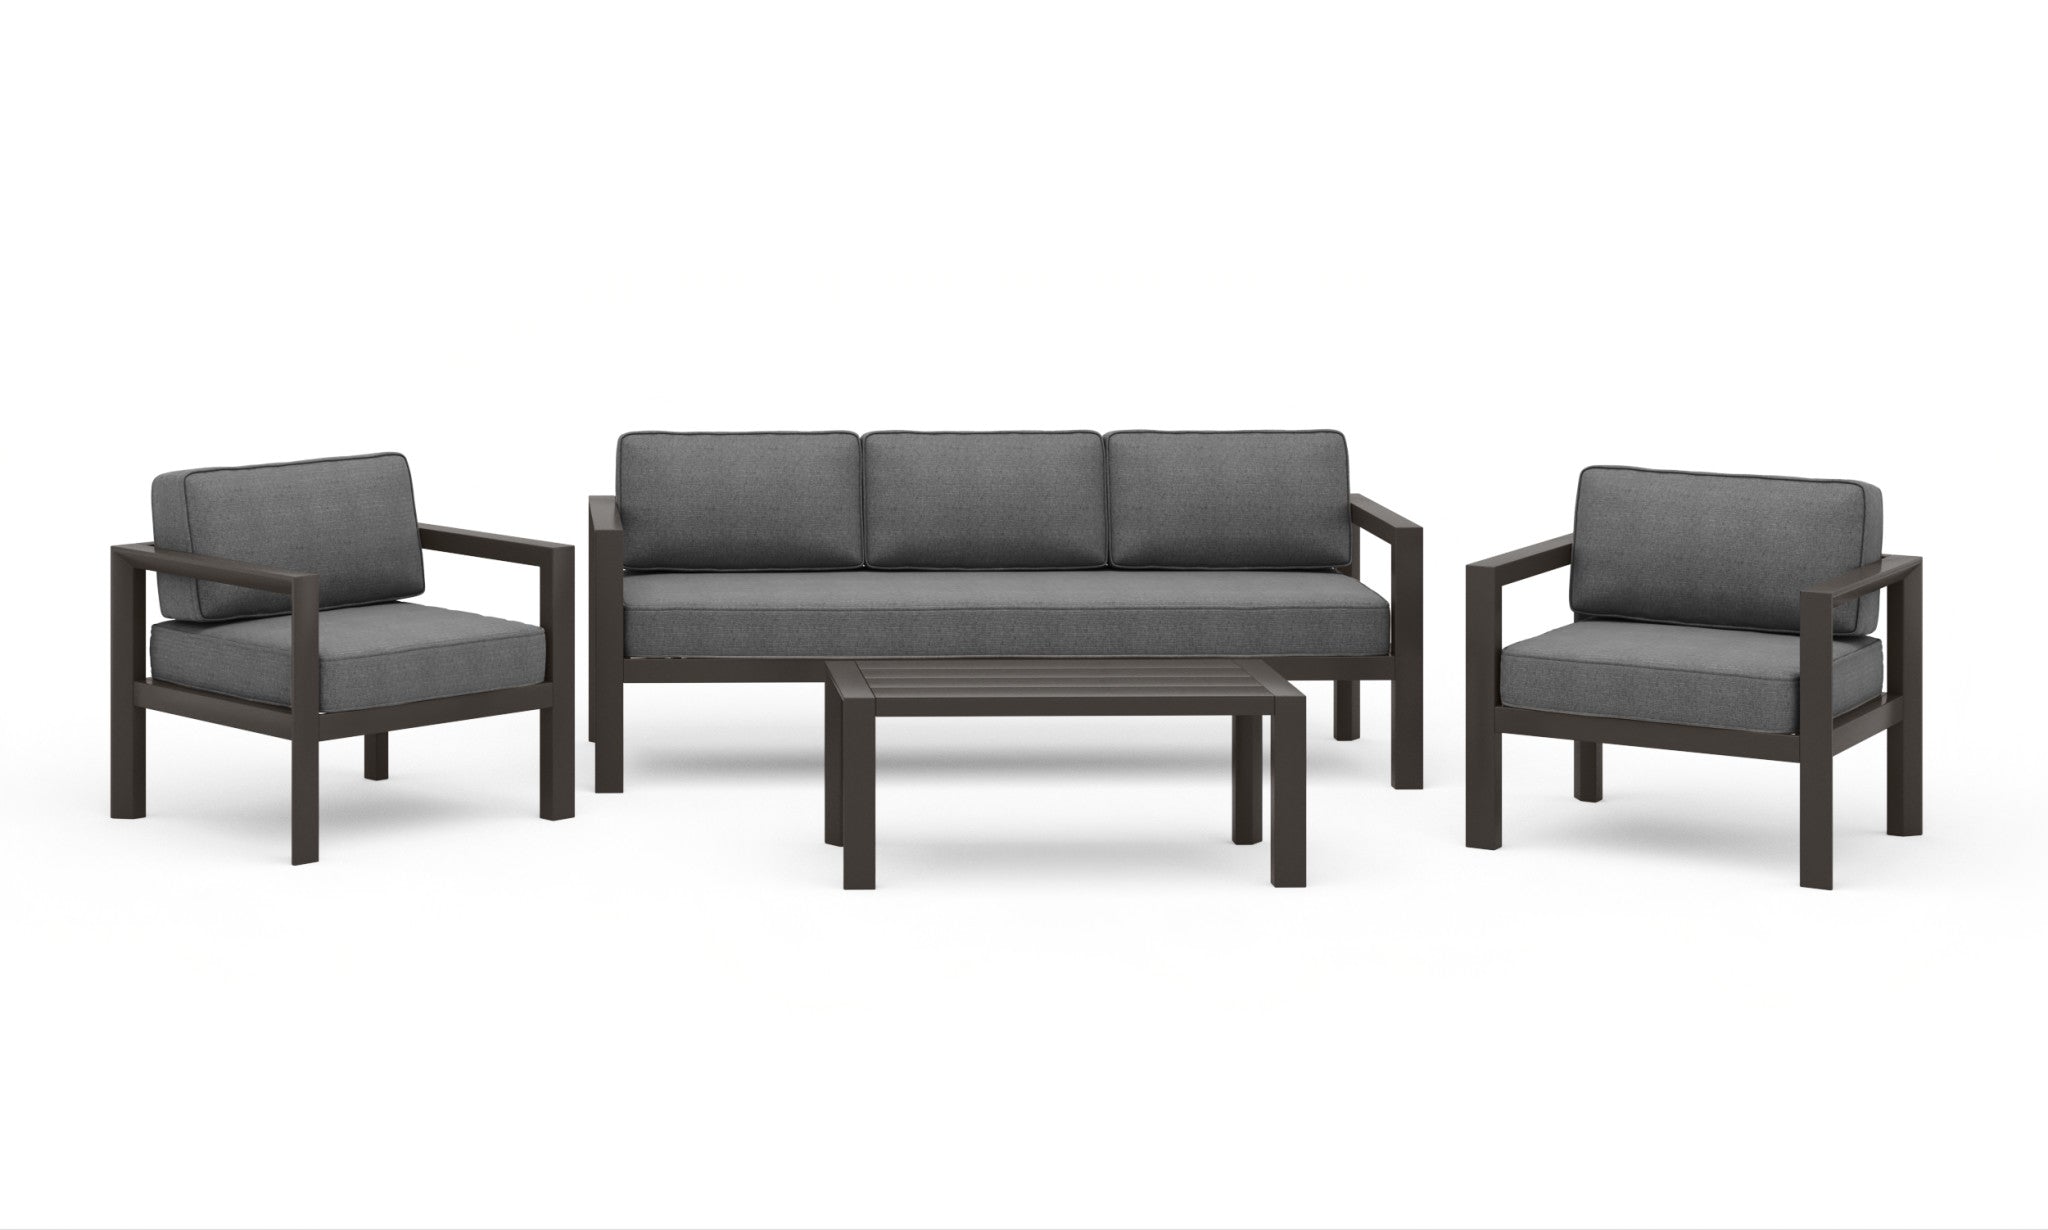 Grayton Outdoor Aluminum Sofa 4-Piece Set by Homestyles - Gray - Aluminum - 6730-30-10D-21